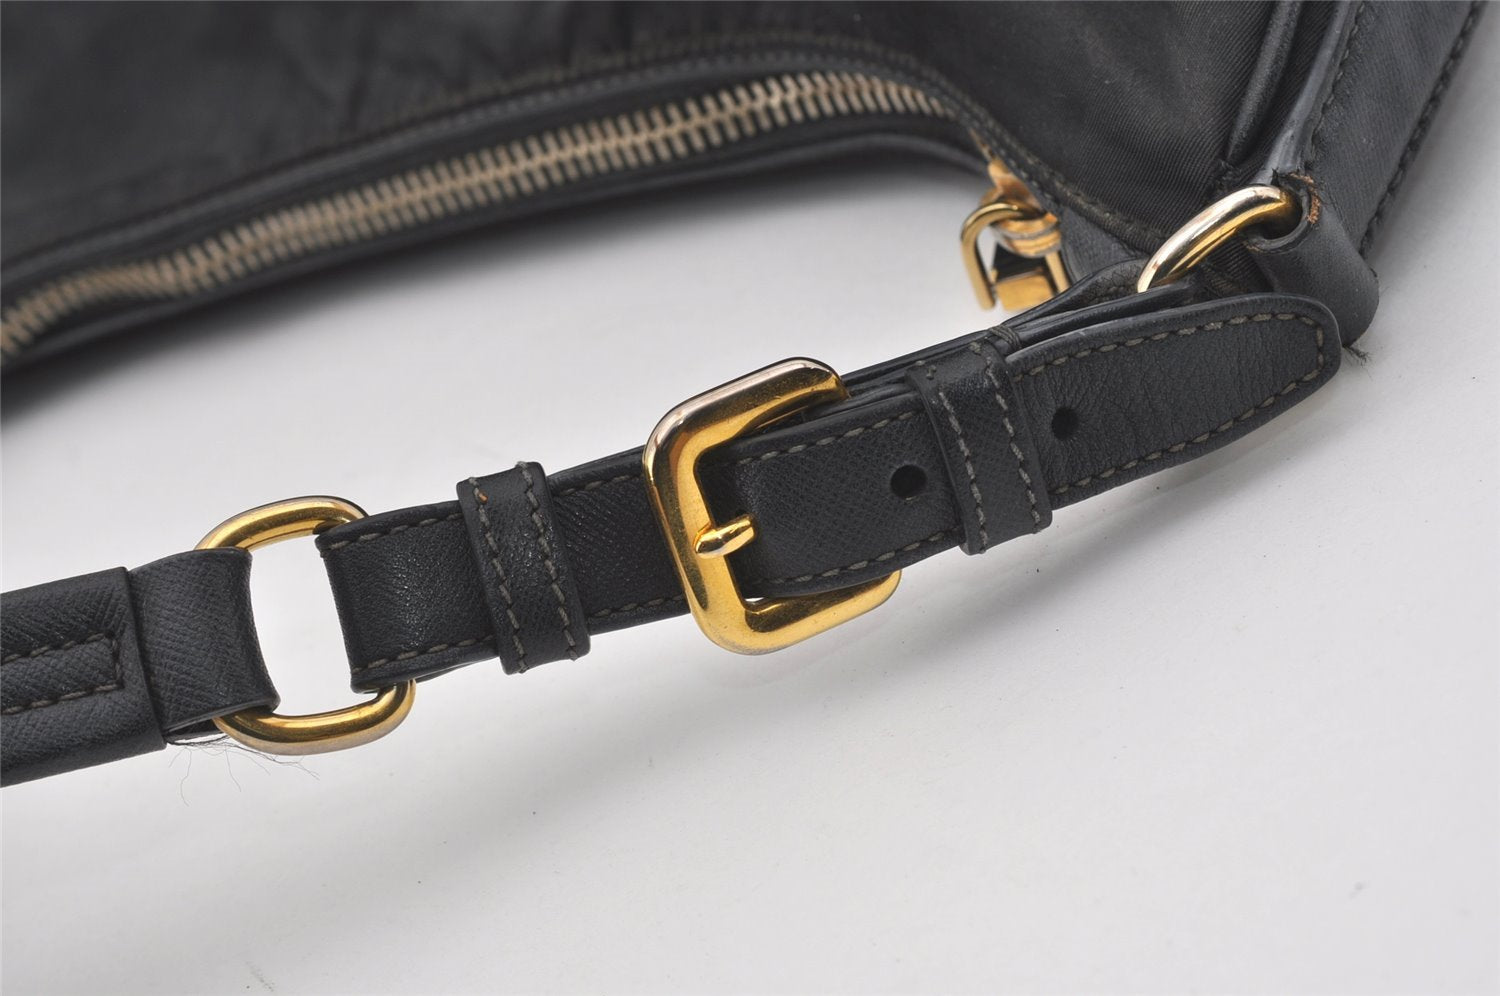 Authentic PRADA Vintage Nylon Tessuto Saffiano Leather Shoulder Bag Black 1484J